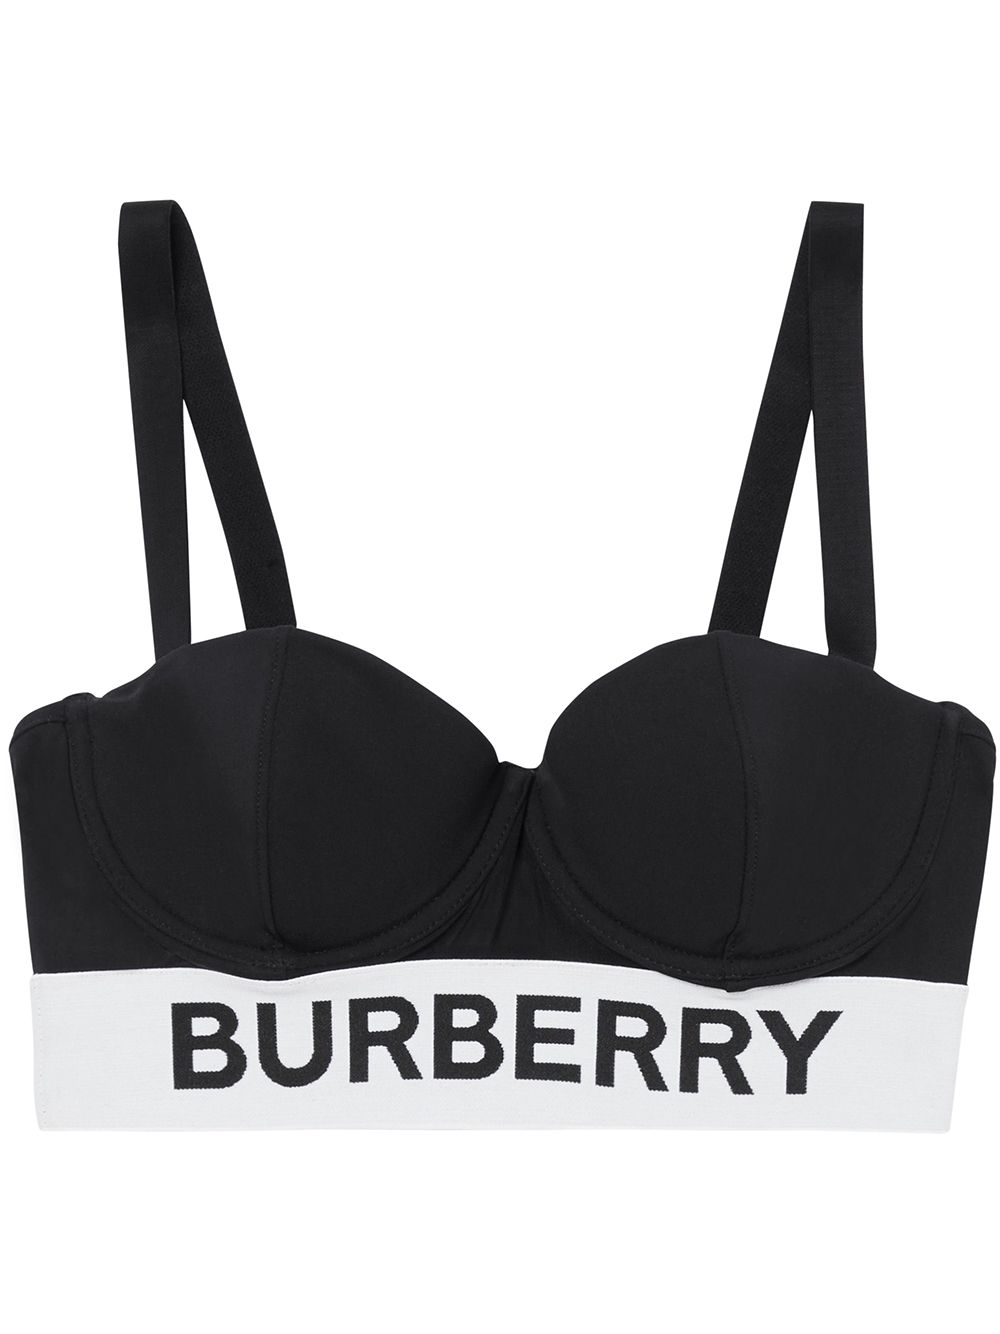 фото Burberry лиф бикини с логотипом